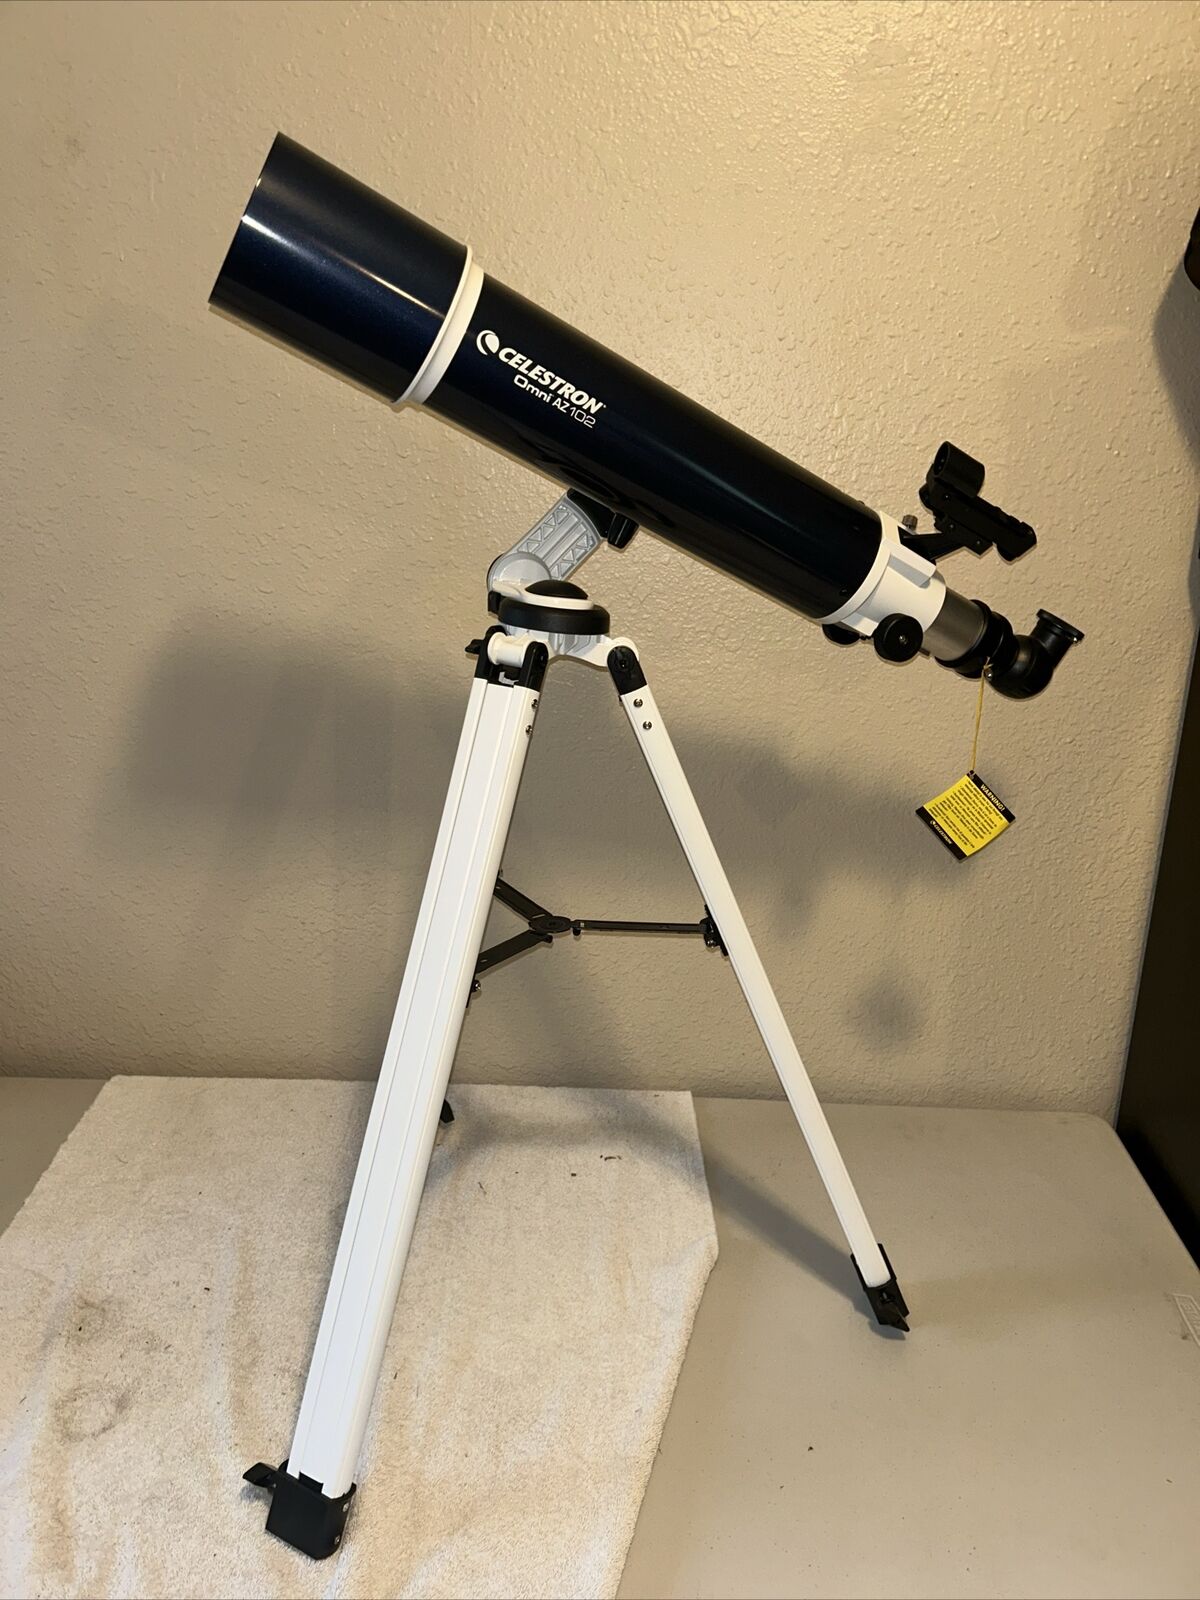 Celestron Omni AZ 102 102mm/f6.5 Reflector Telescope with Smartphone Adapter